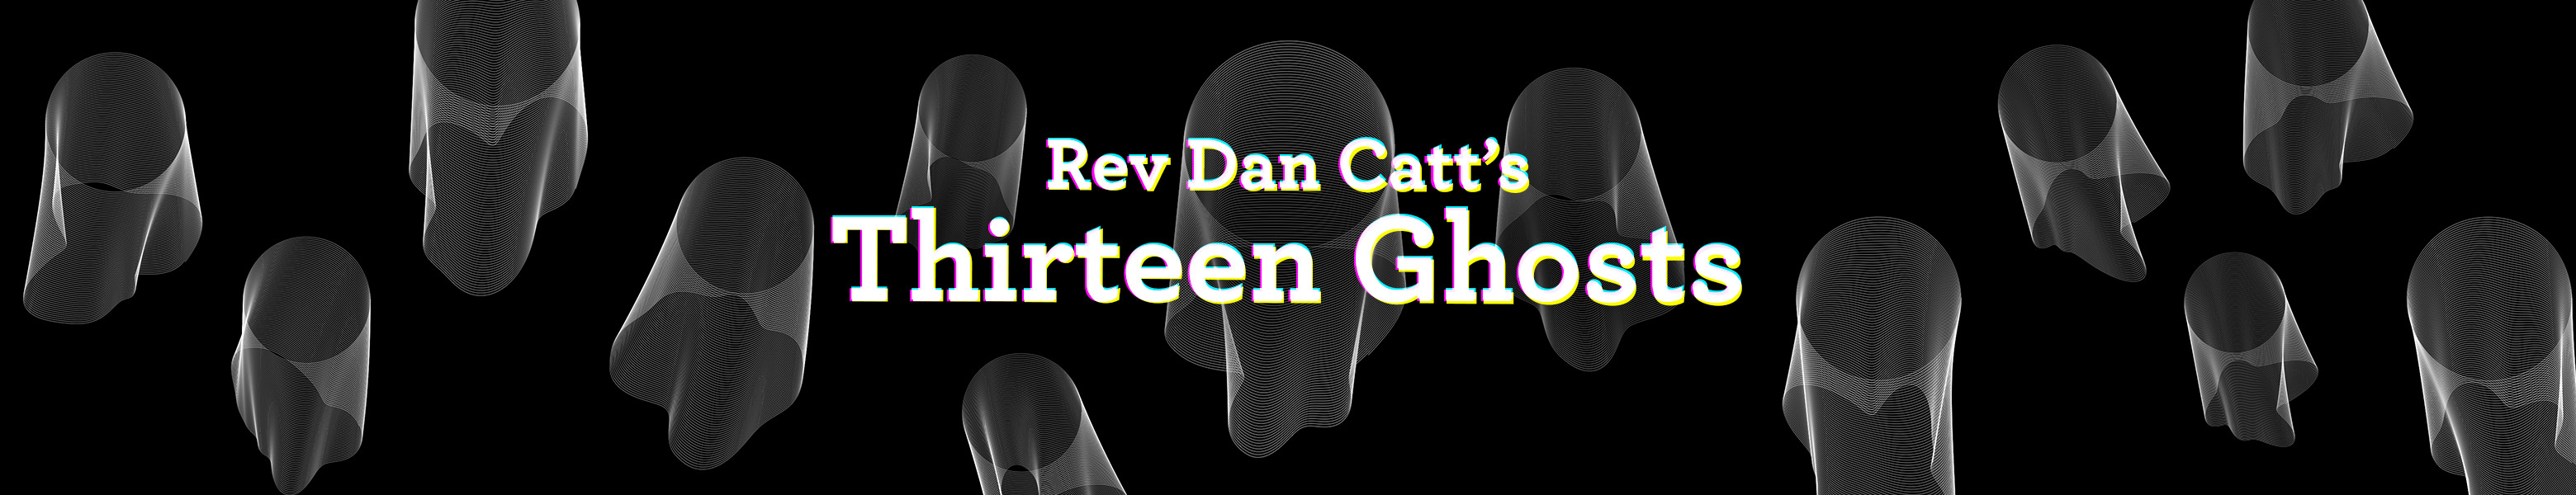 Rev Dan Catt's Thirteen Ghosts